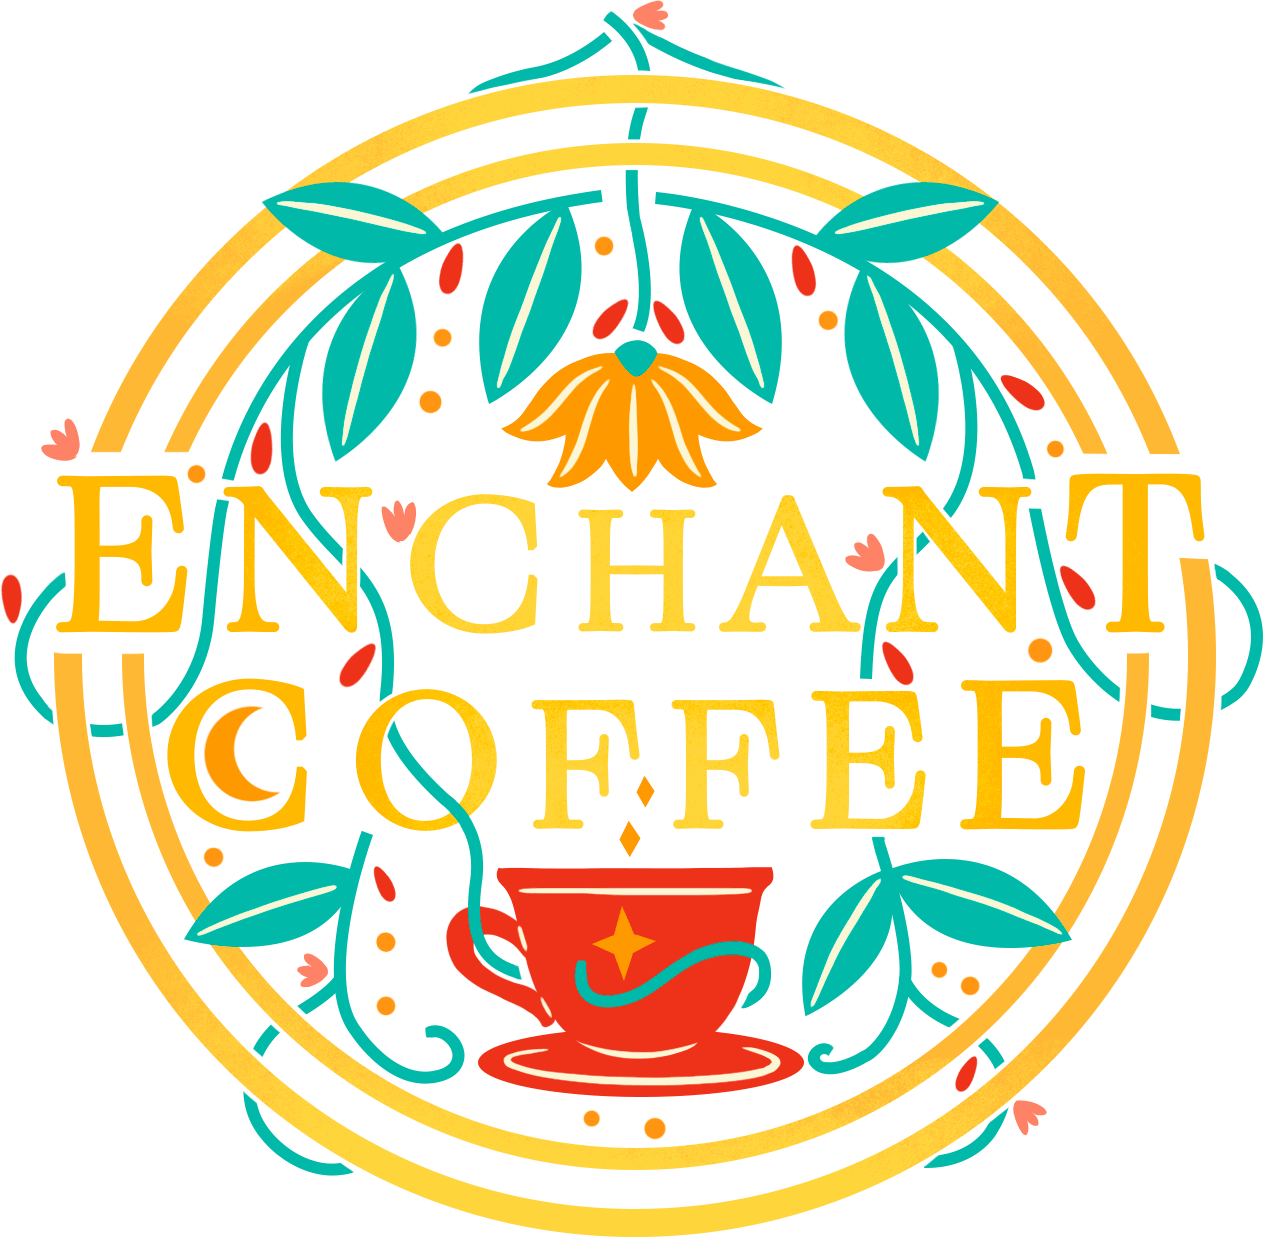 Enchant Coffee